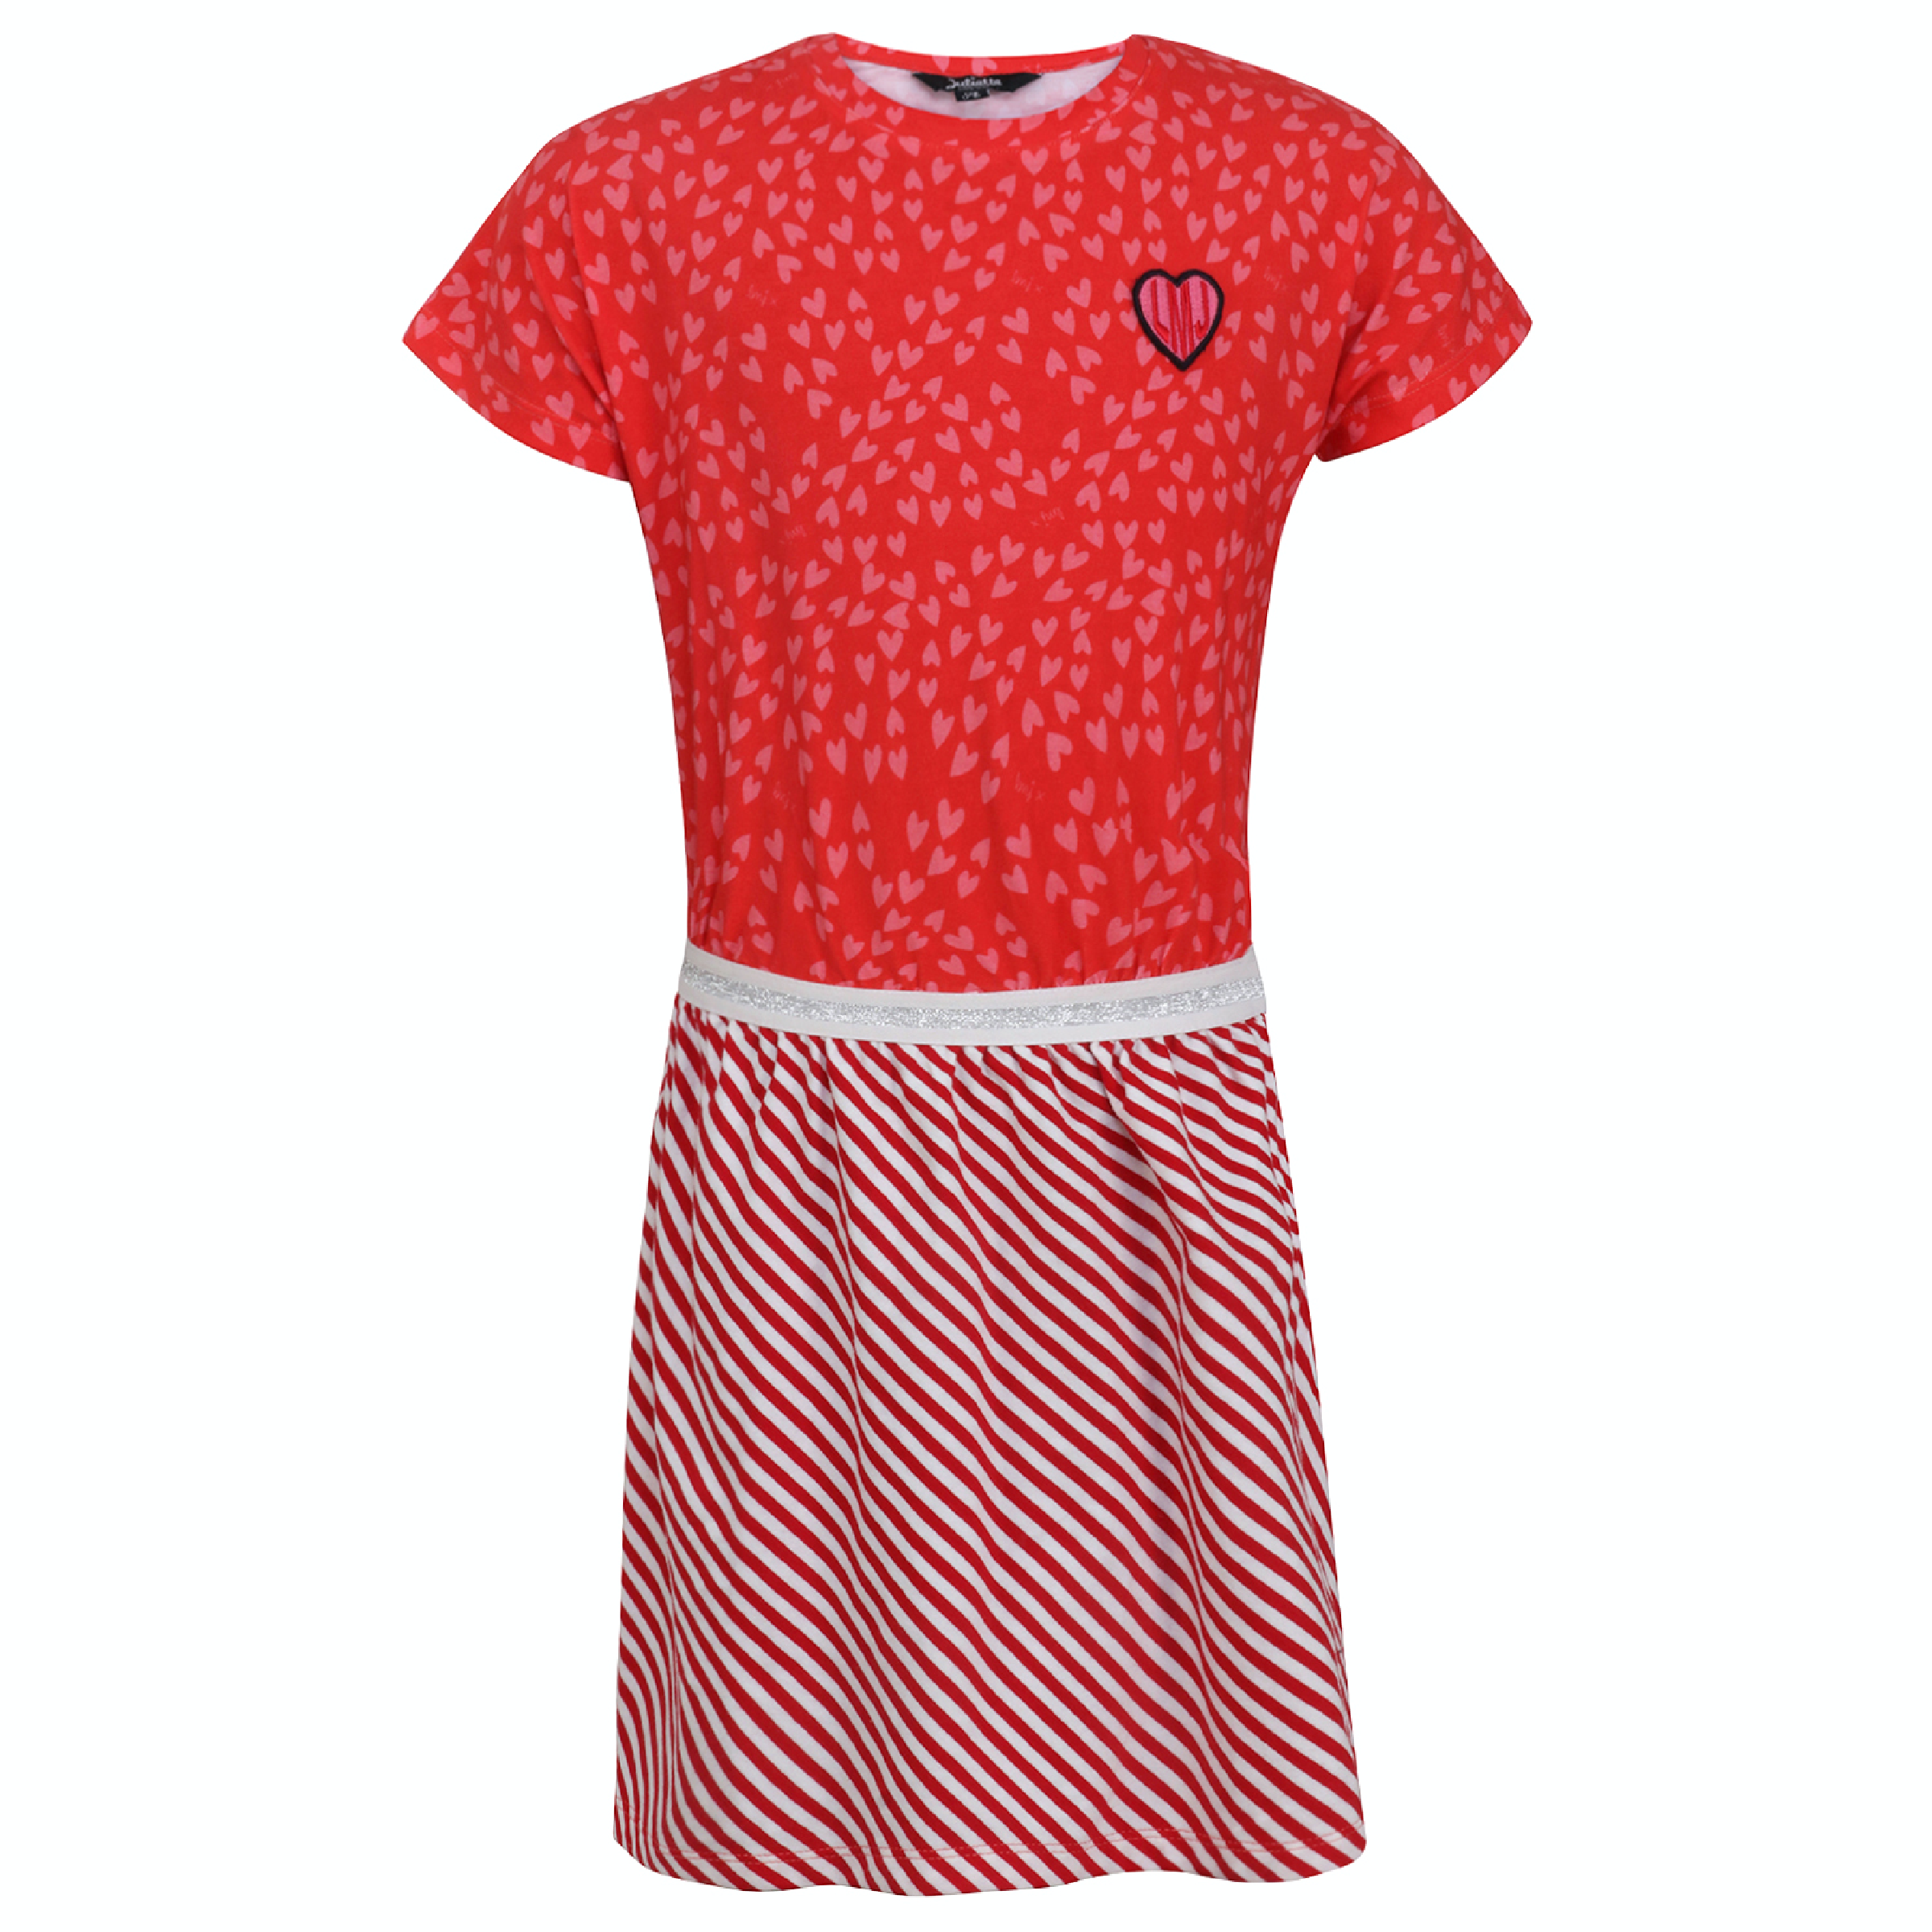 Meisjes Dress Heart van Miss Juliette in de kleur Rood in maat 146, 152.